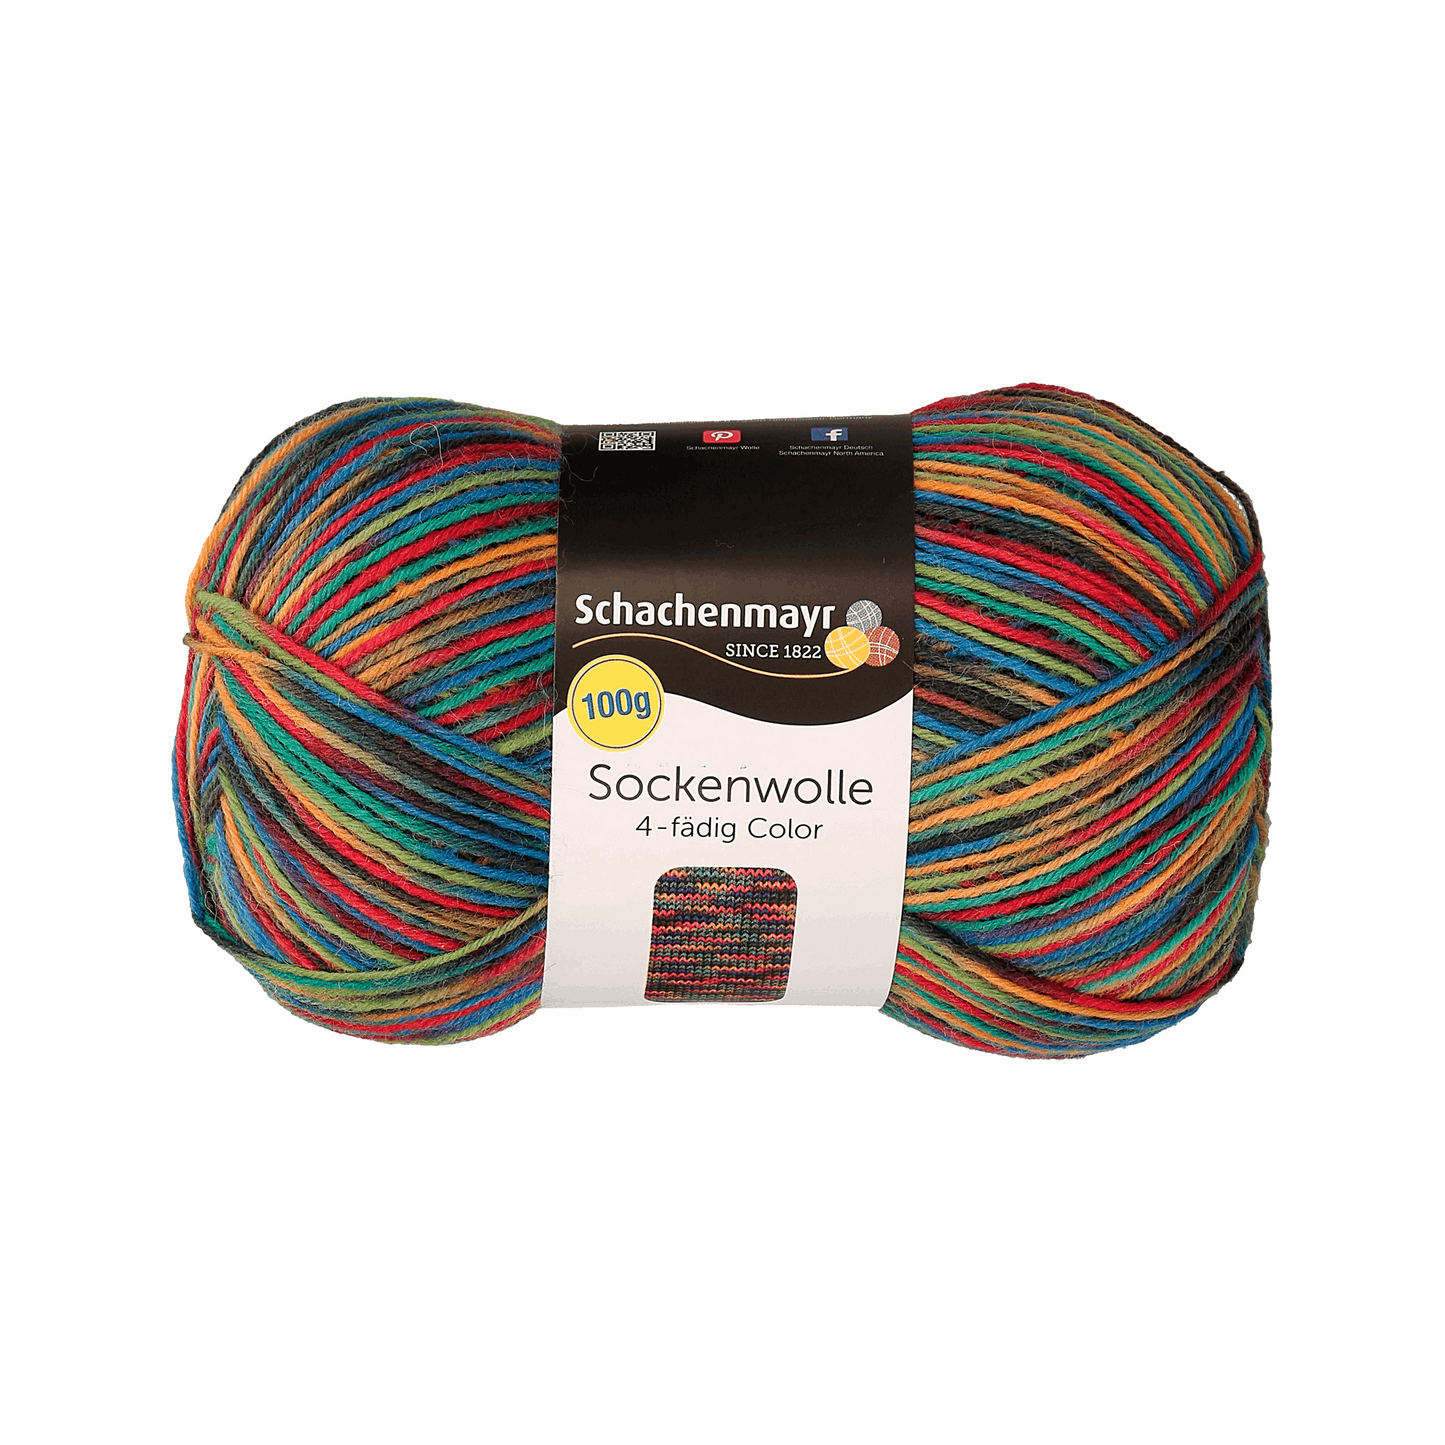 Schachenmayr sock yarn Color 100g, 97132, color exotic186